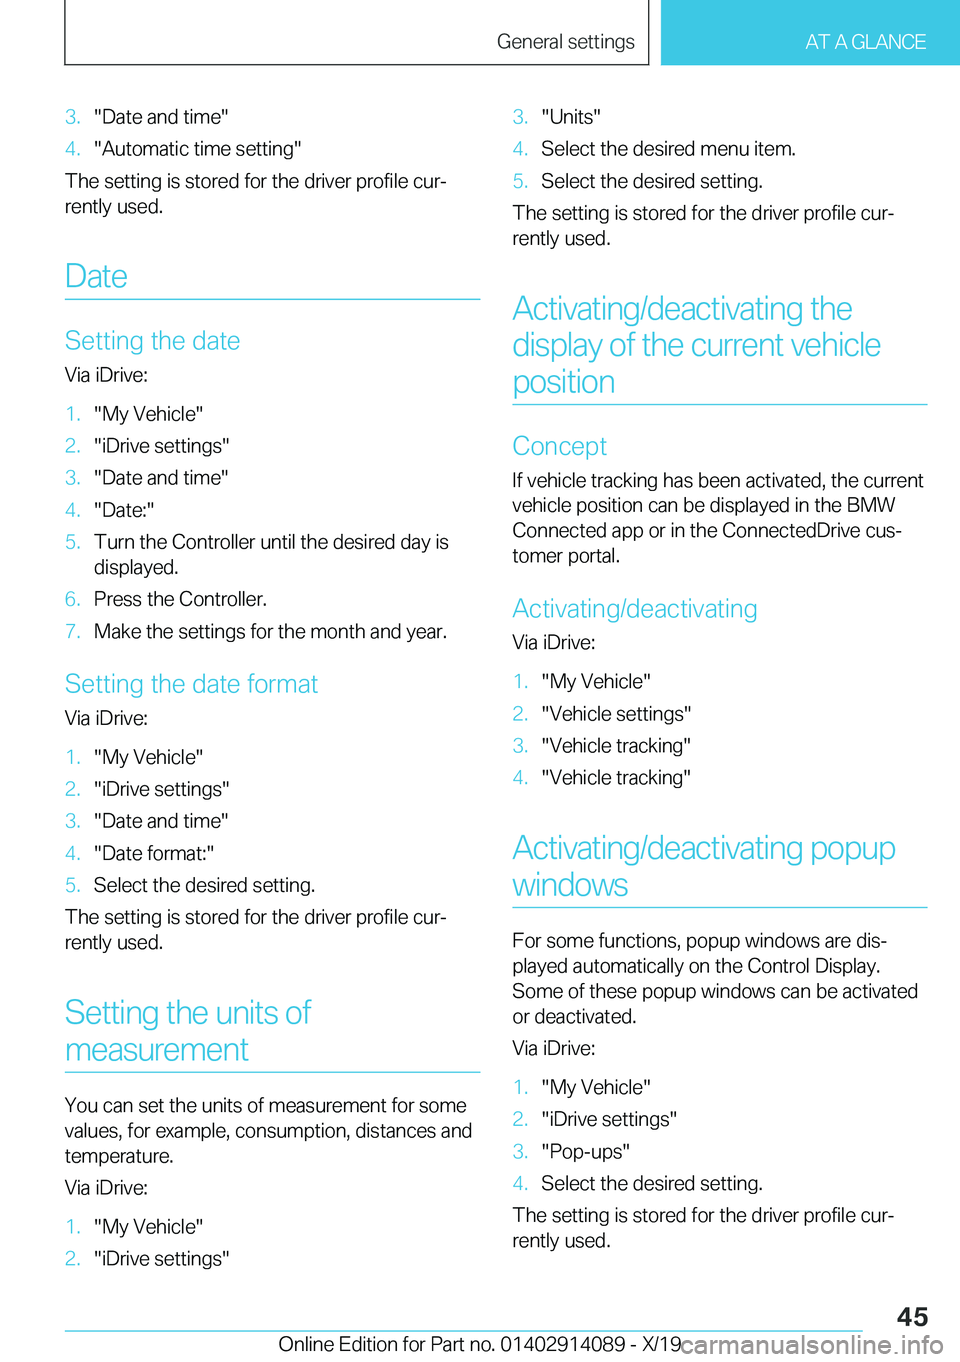 BMW I8 2020 Service Manual �3�.��D�a�t�e��a�n�d��t�i�m�e��4�.��A�u�t�o�m�a�t�i�c��t�i�m�e��s�e�t�t�i�n�g�
�T�h�e��s�e�t�t�i�n�g��i�s��s�t�o�r�e�d��f�o�r��t�h�e��d�r�i�v�e�r��p�r�o�f�i�l�e��c�u�rj
�r�e�n�t�l�y�